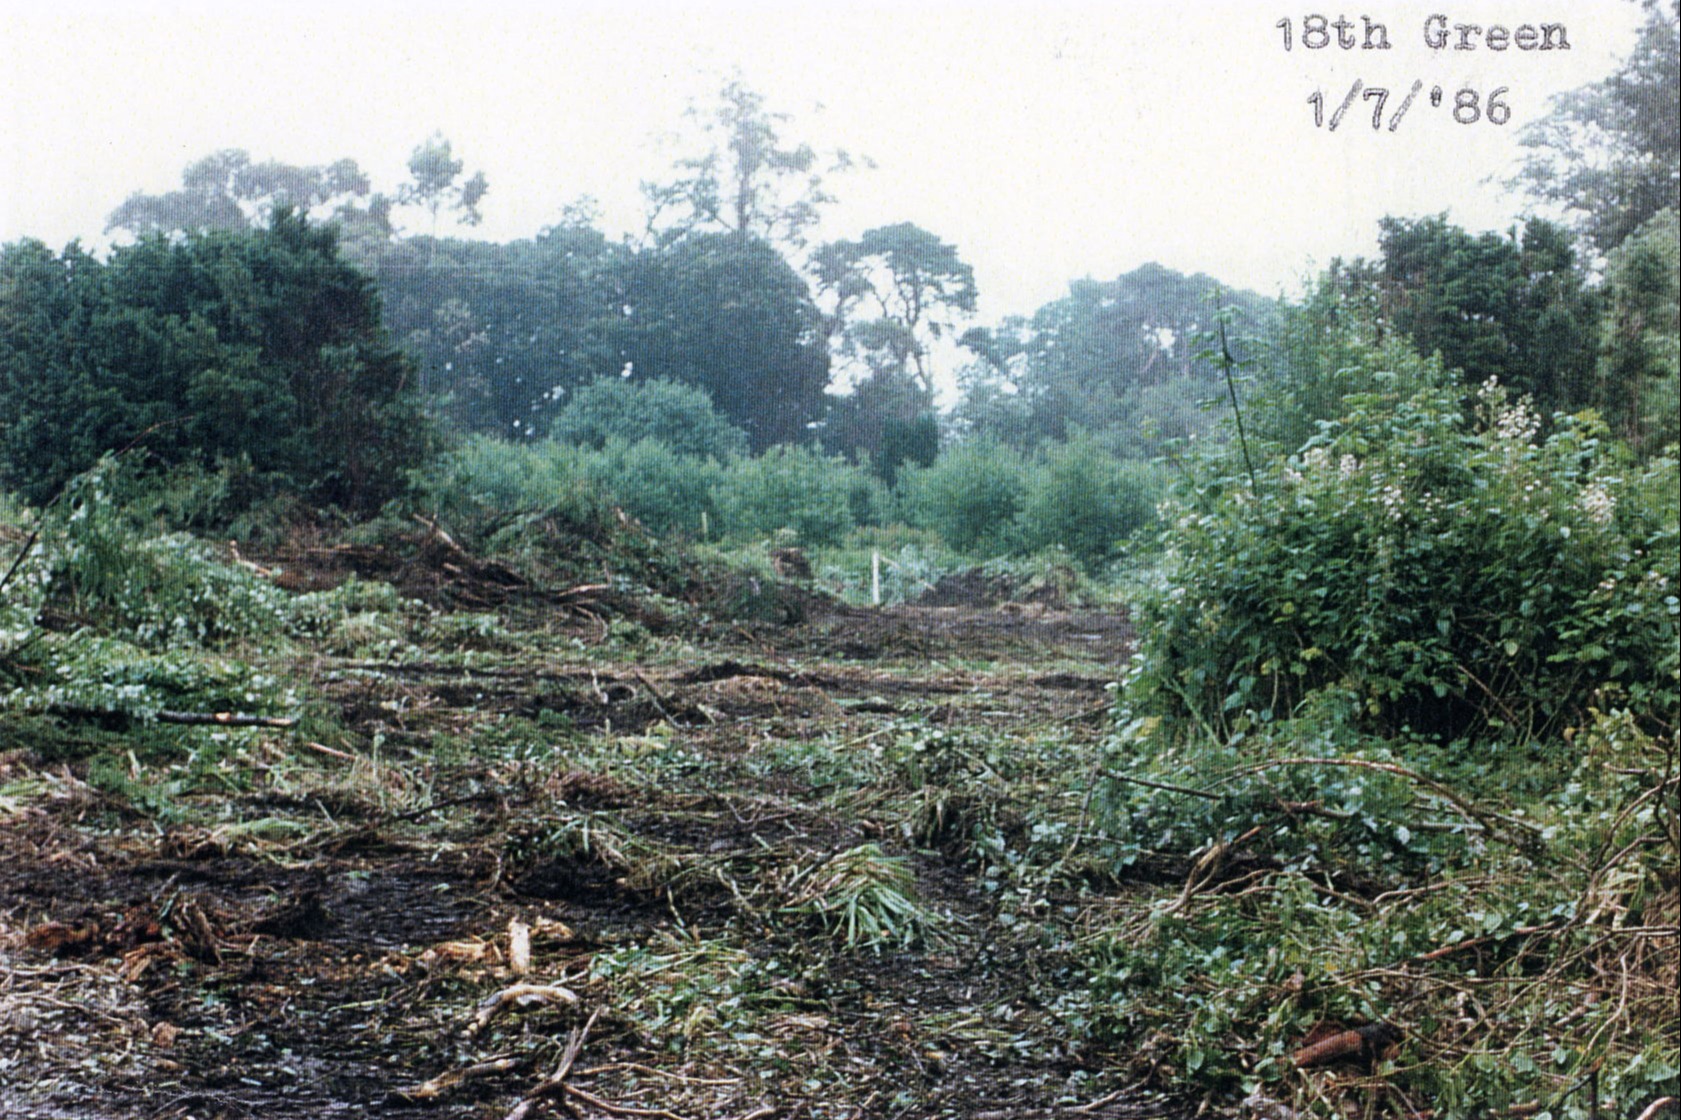 18th Green under construction - 1986